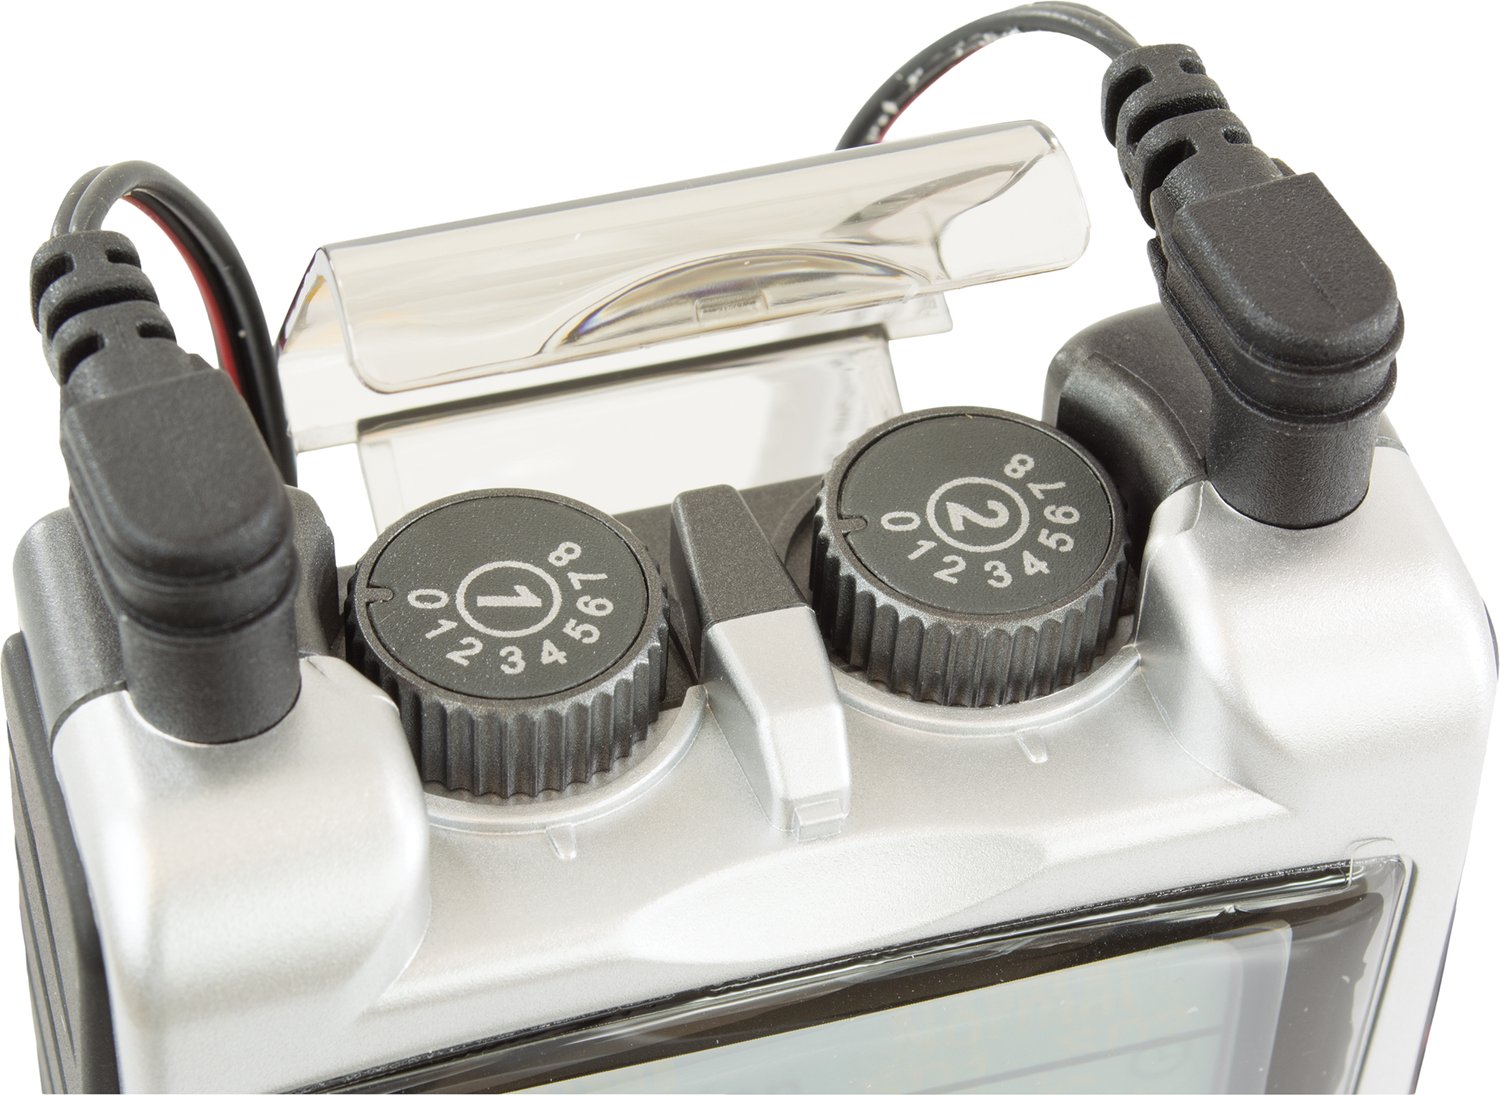 TENS 3000 electrical stimulation unit — VitalCare Technology